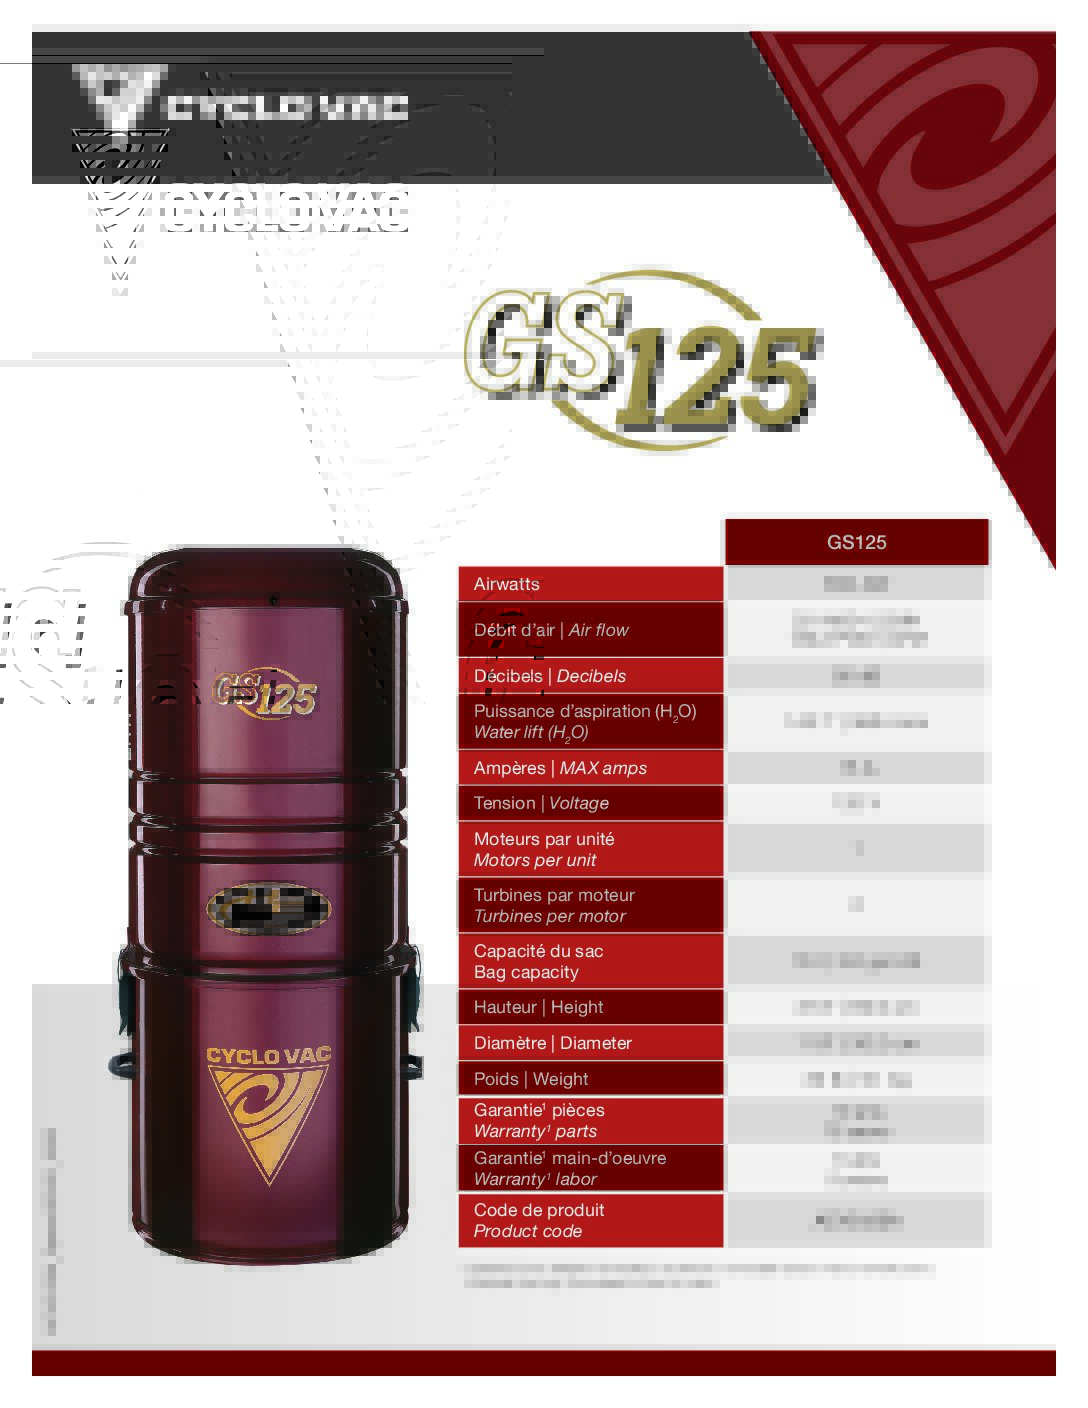 Cyclovac GS125 Central Vacuum